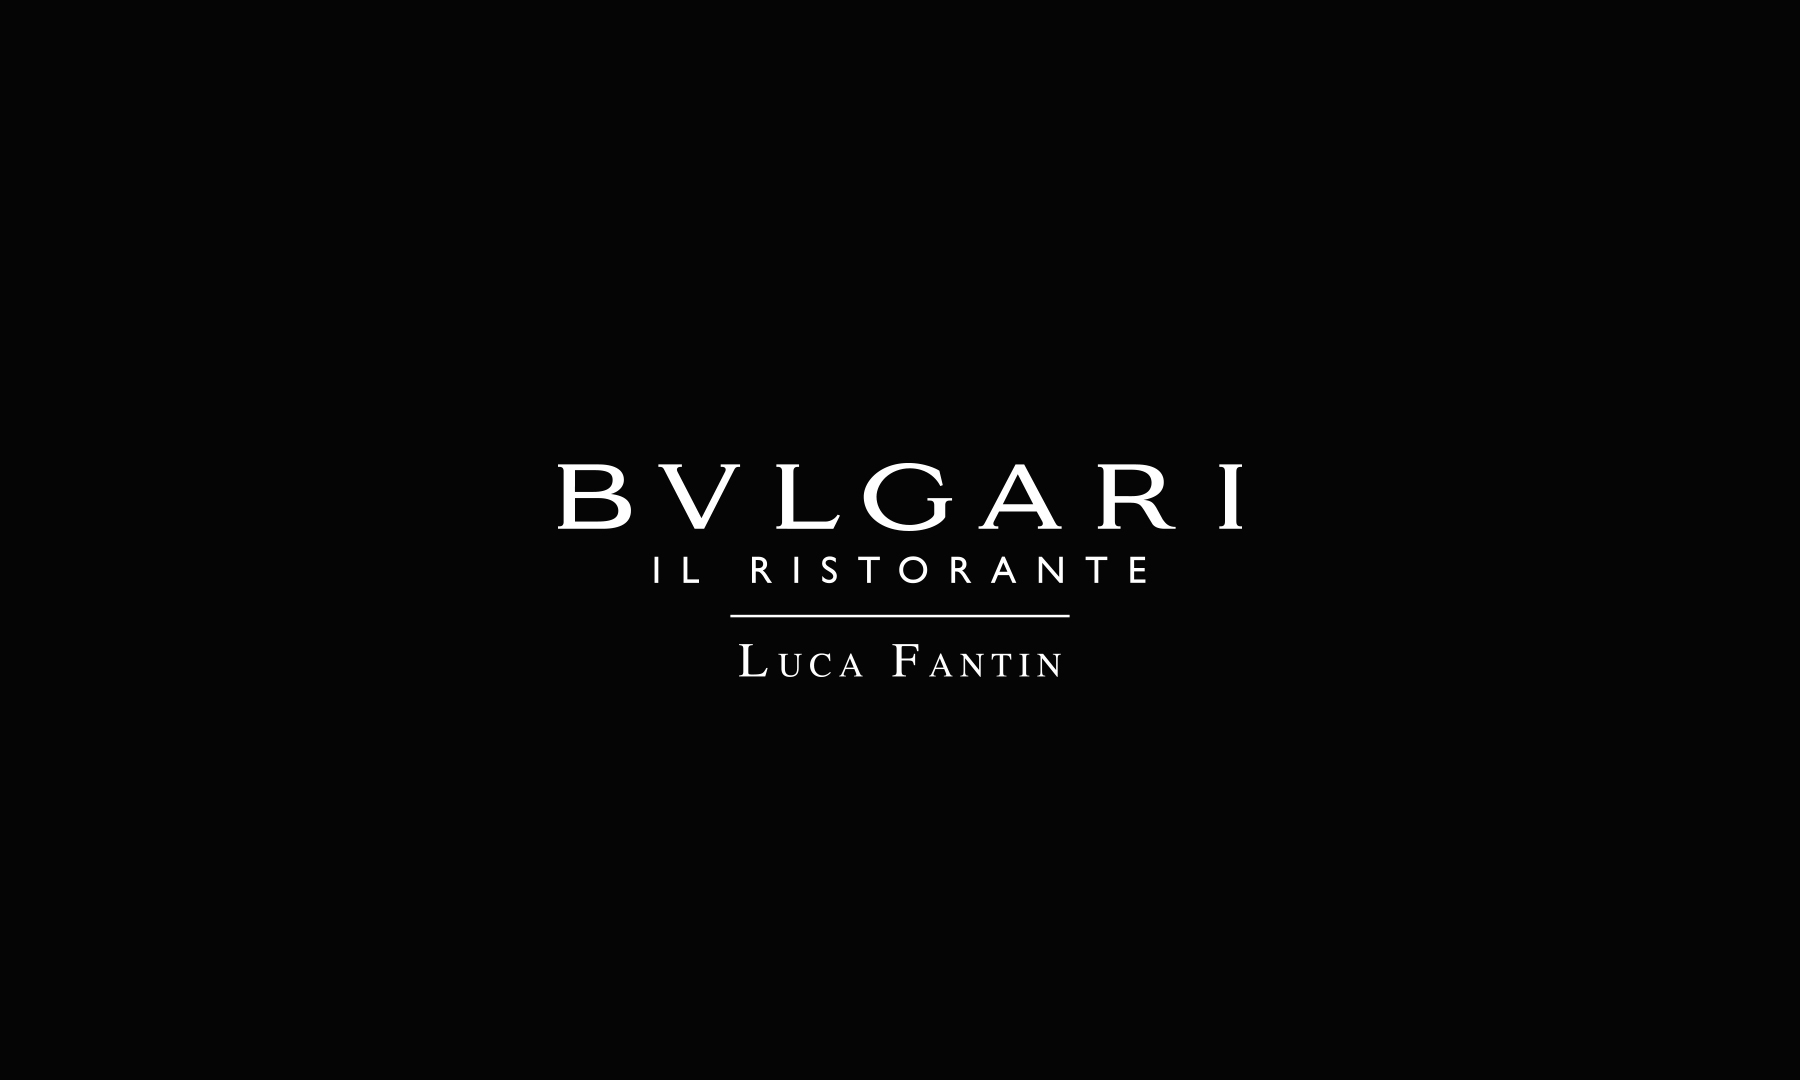 BVLGARI Il Ristorante Luca Fantin (Takeaway)'s images4